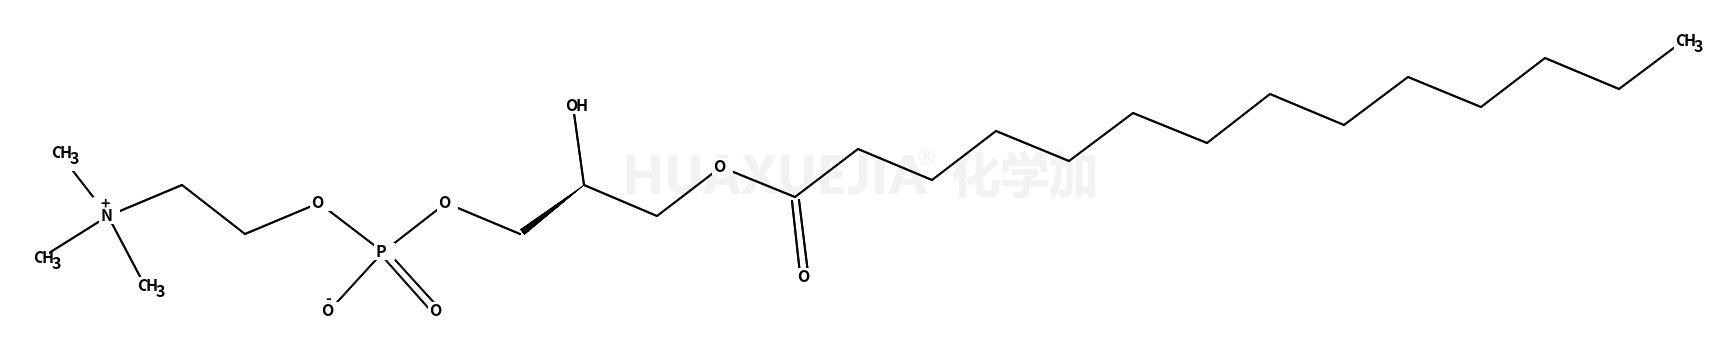 1-myristoyl-2-hydroxy-sn-glycero-3-phosphocholine